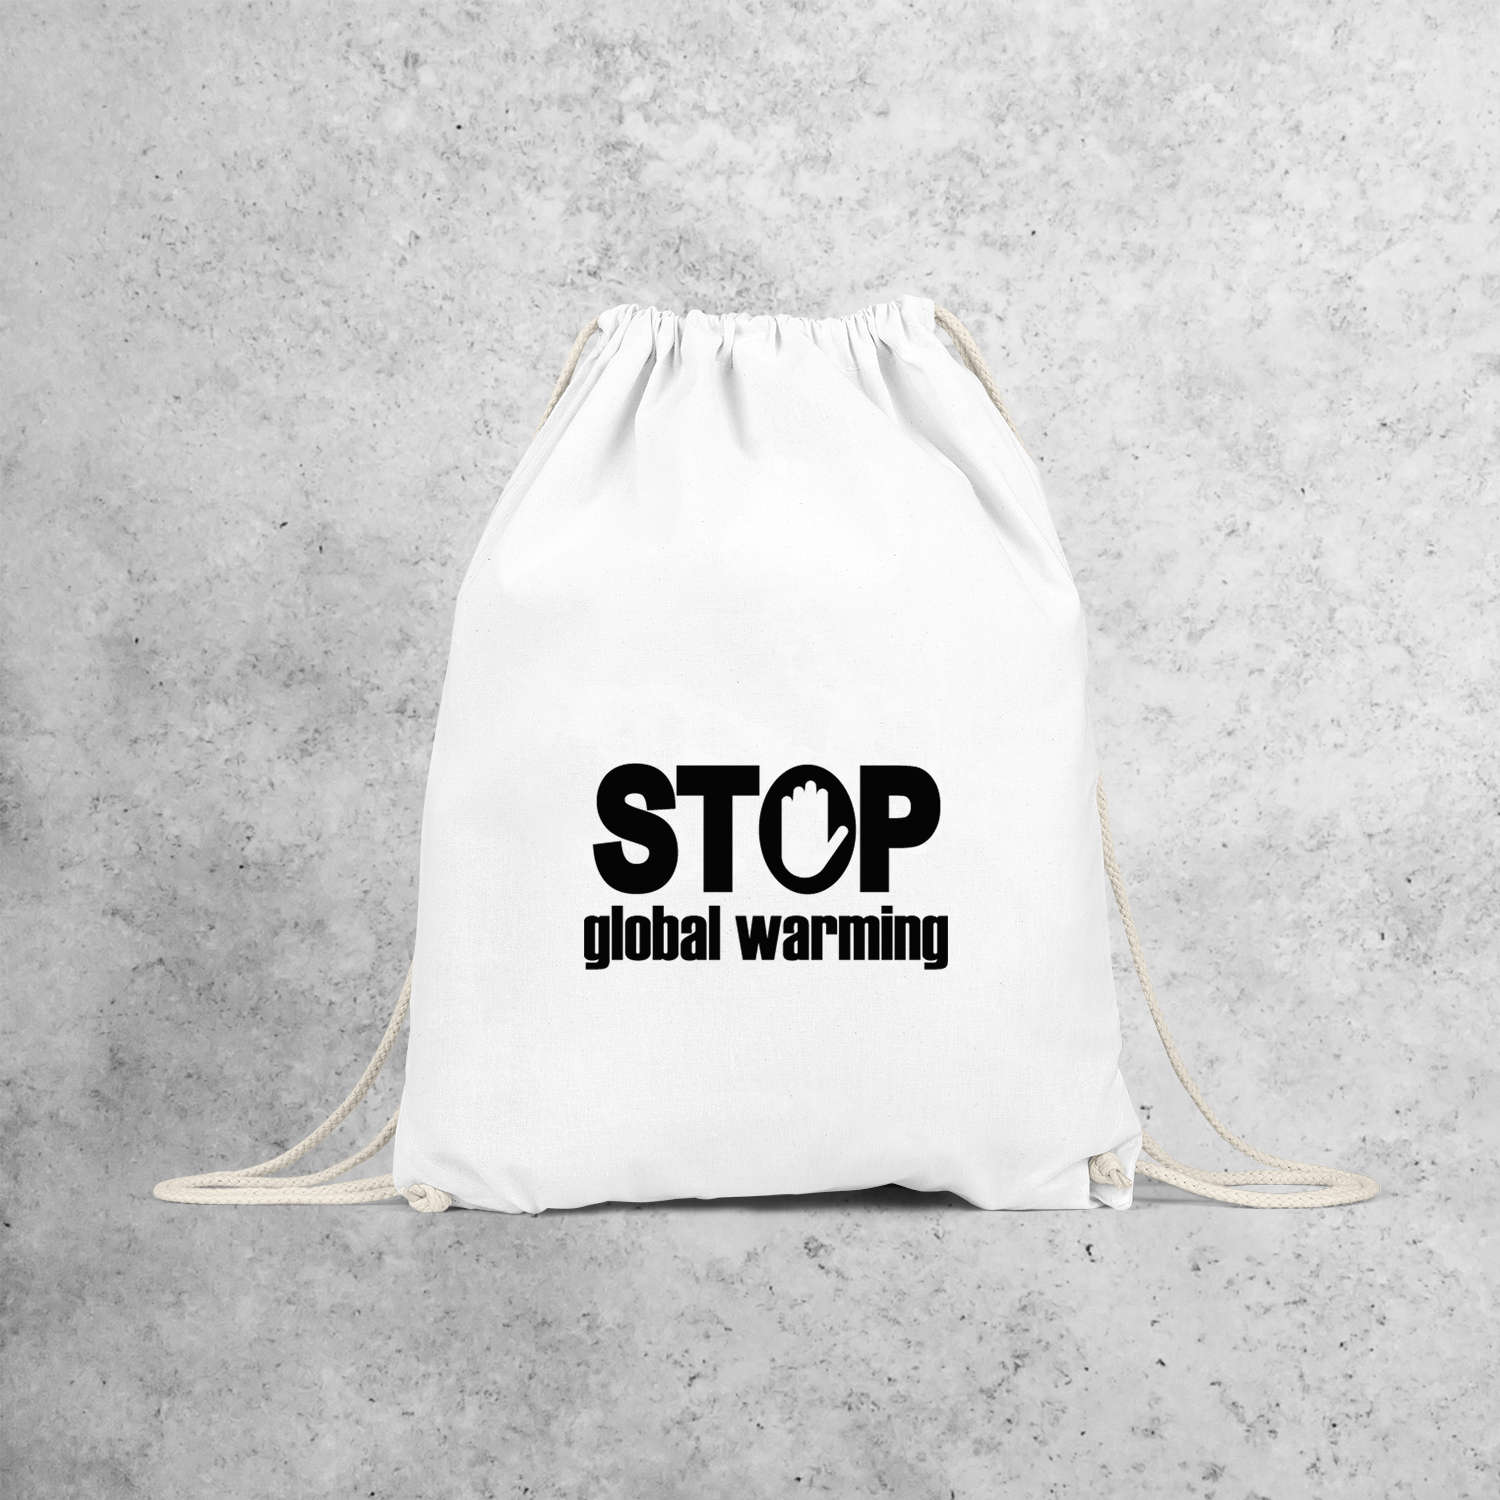 'Stop global warming' backpack